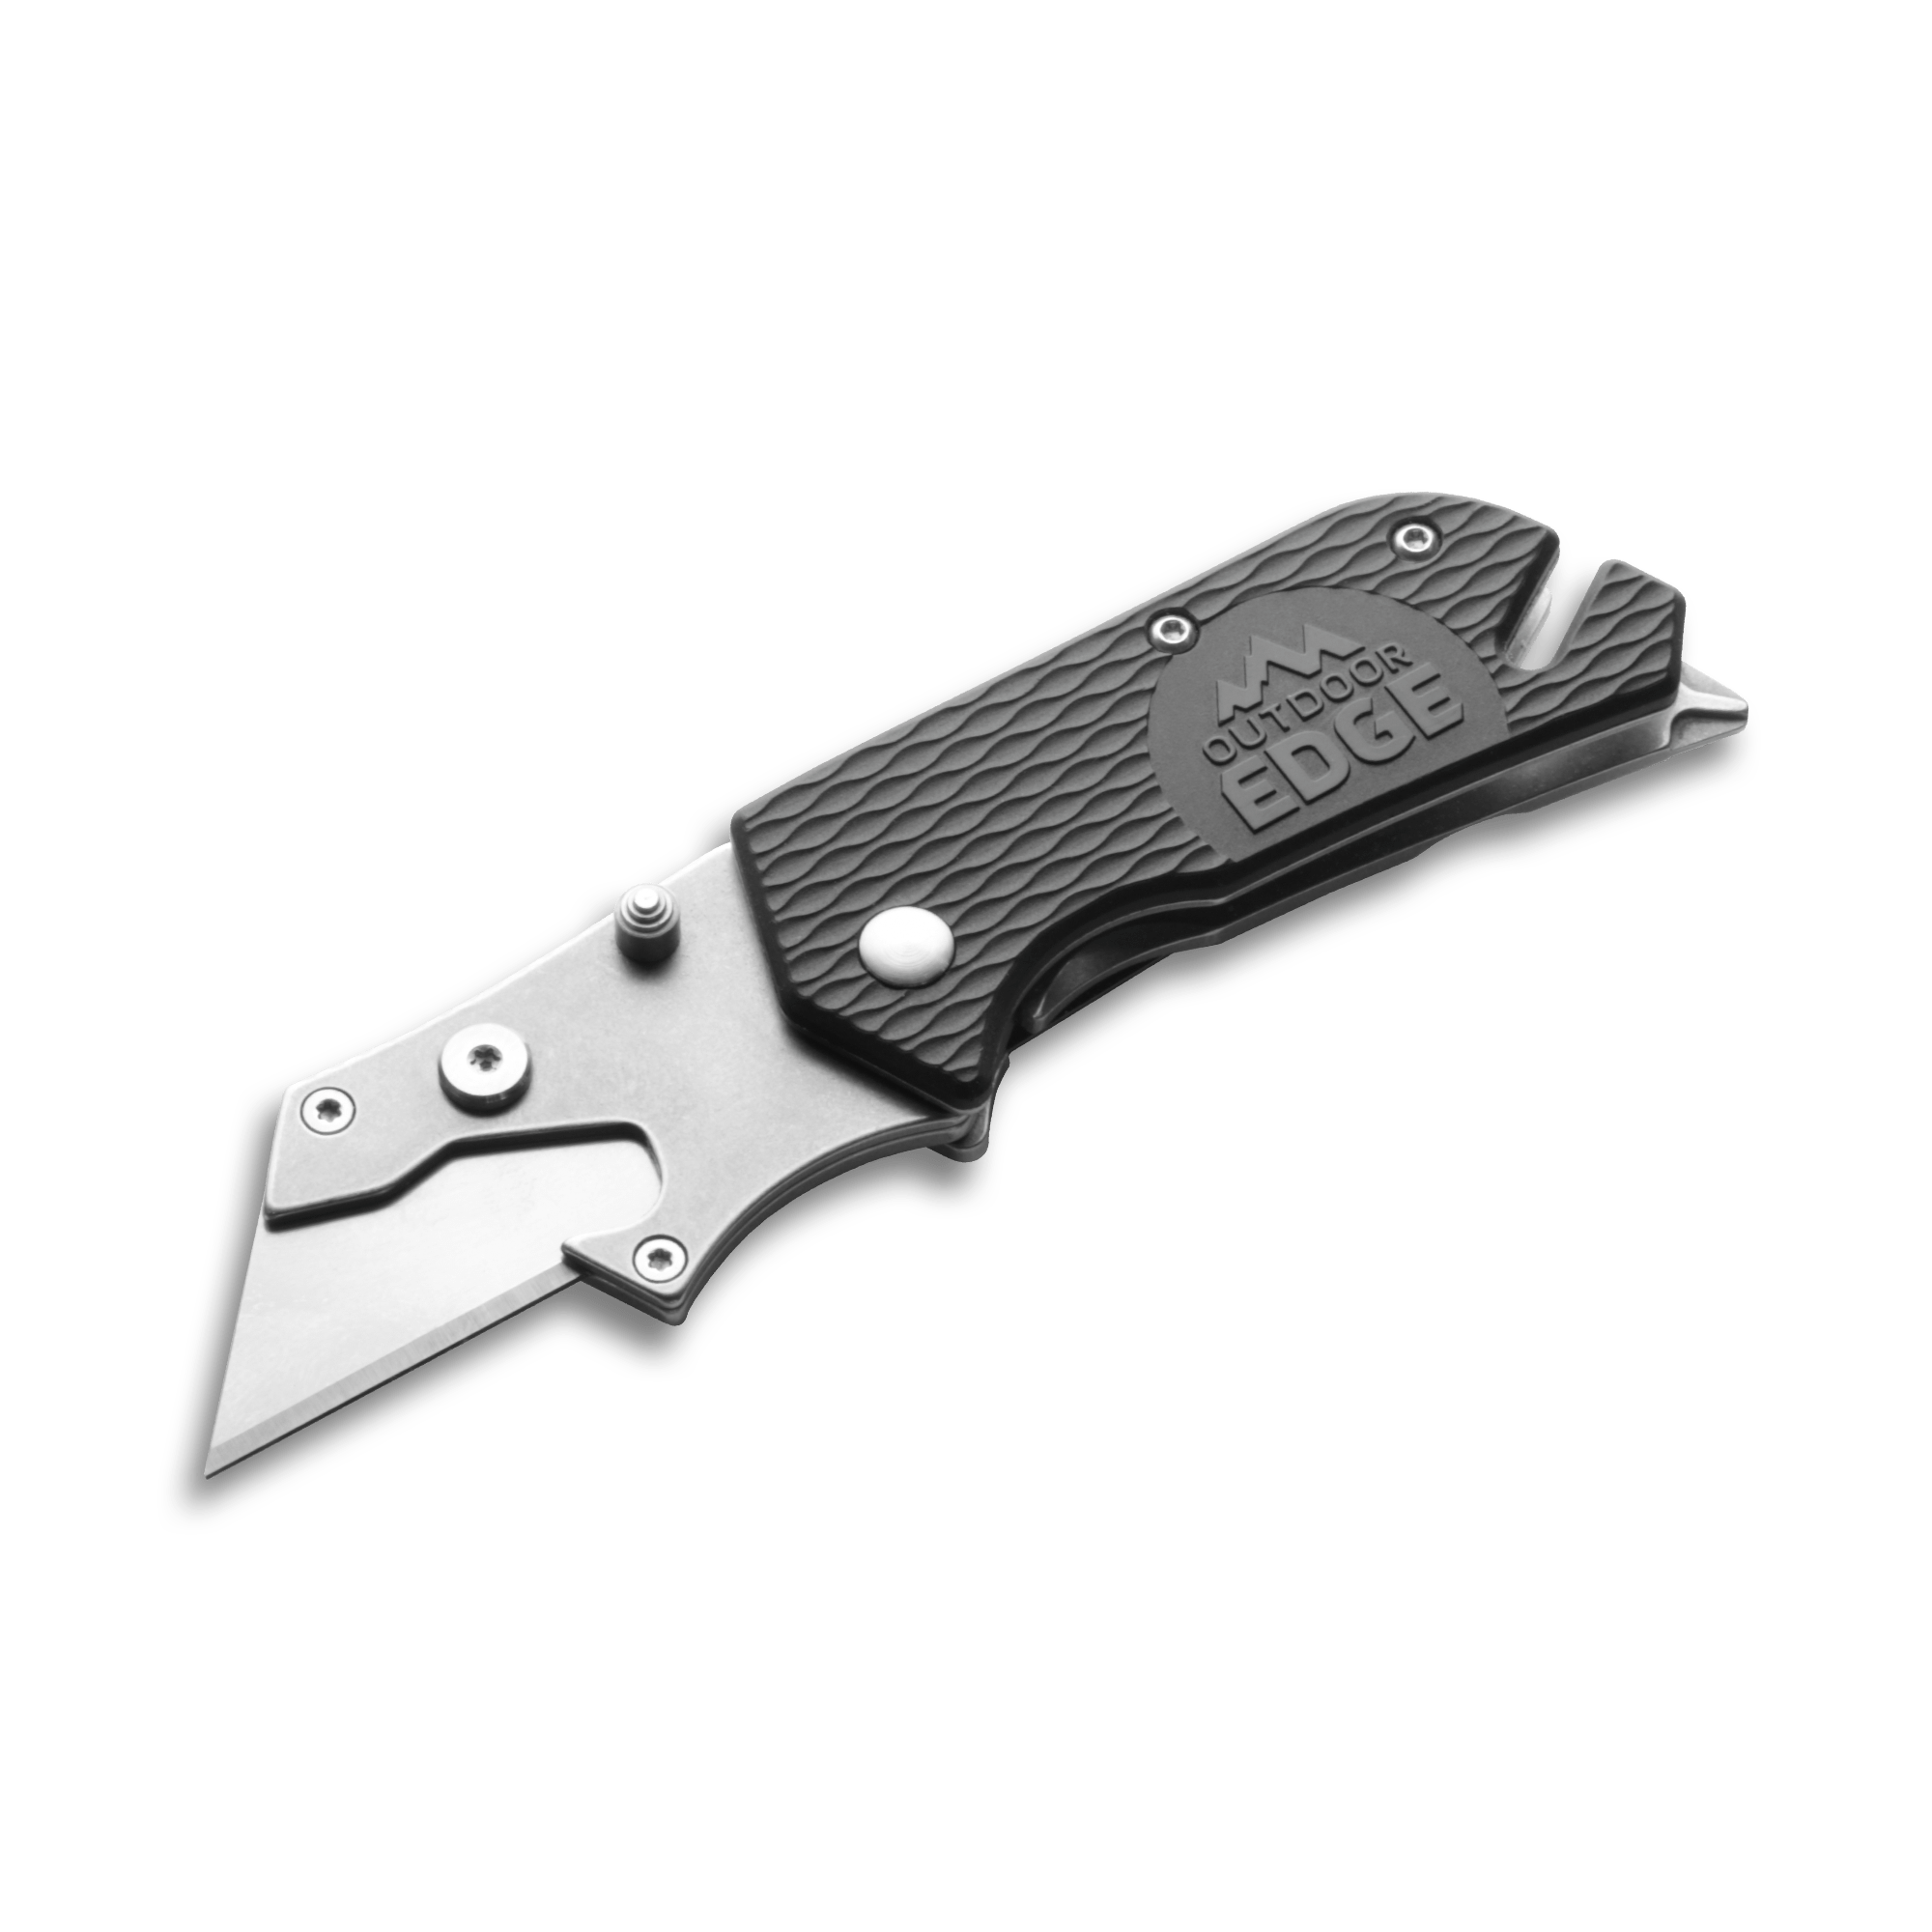 B.O.A (Box Opening Assistant)-Folding Utility Knife